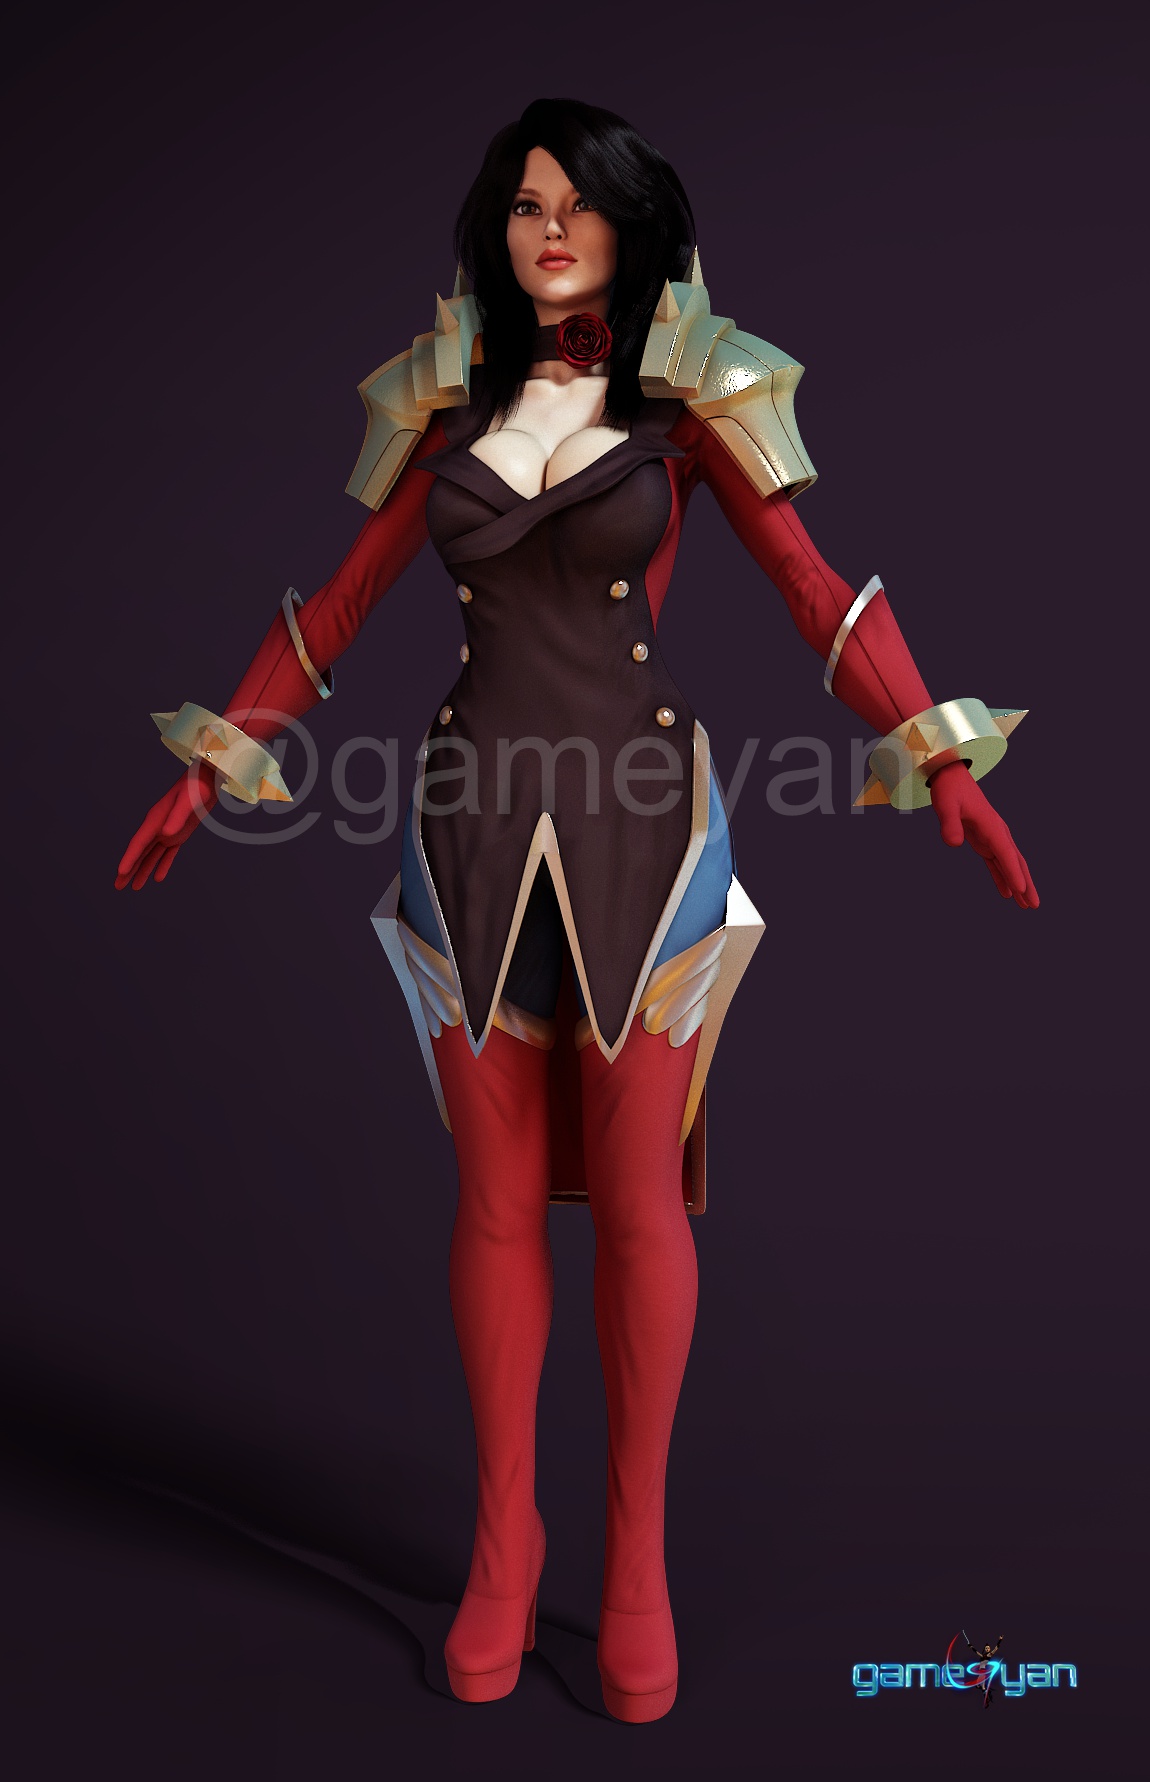 3D Female Fantacy Warrior Character Modeling for Games By 3D Game Art Studio